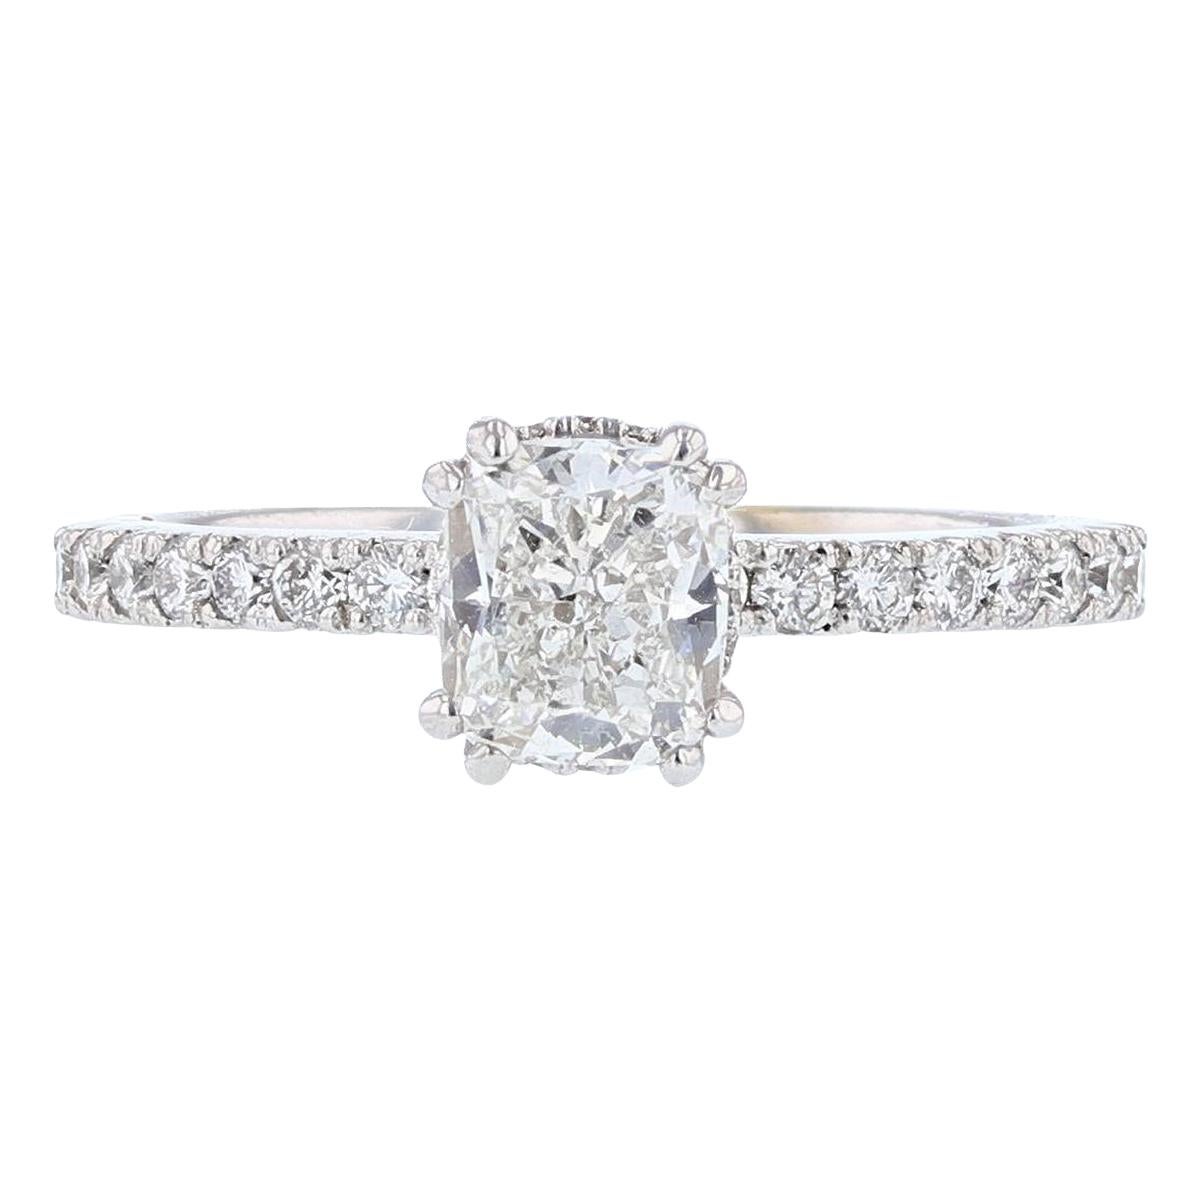 Nazarelle GIA Certified 1.02 Carat Cushion Cut Diamond Engagement Ring